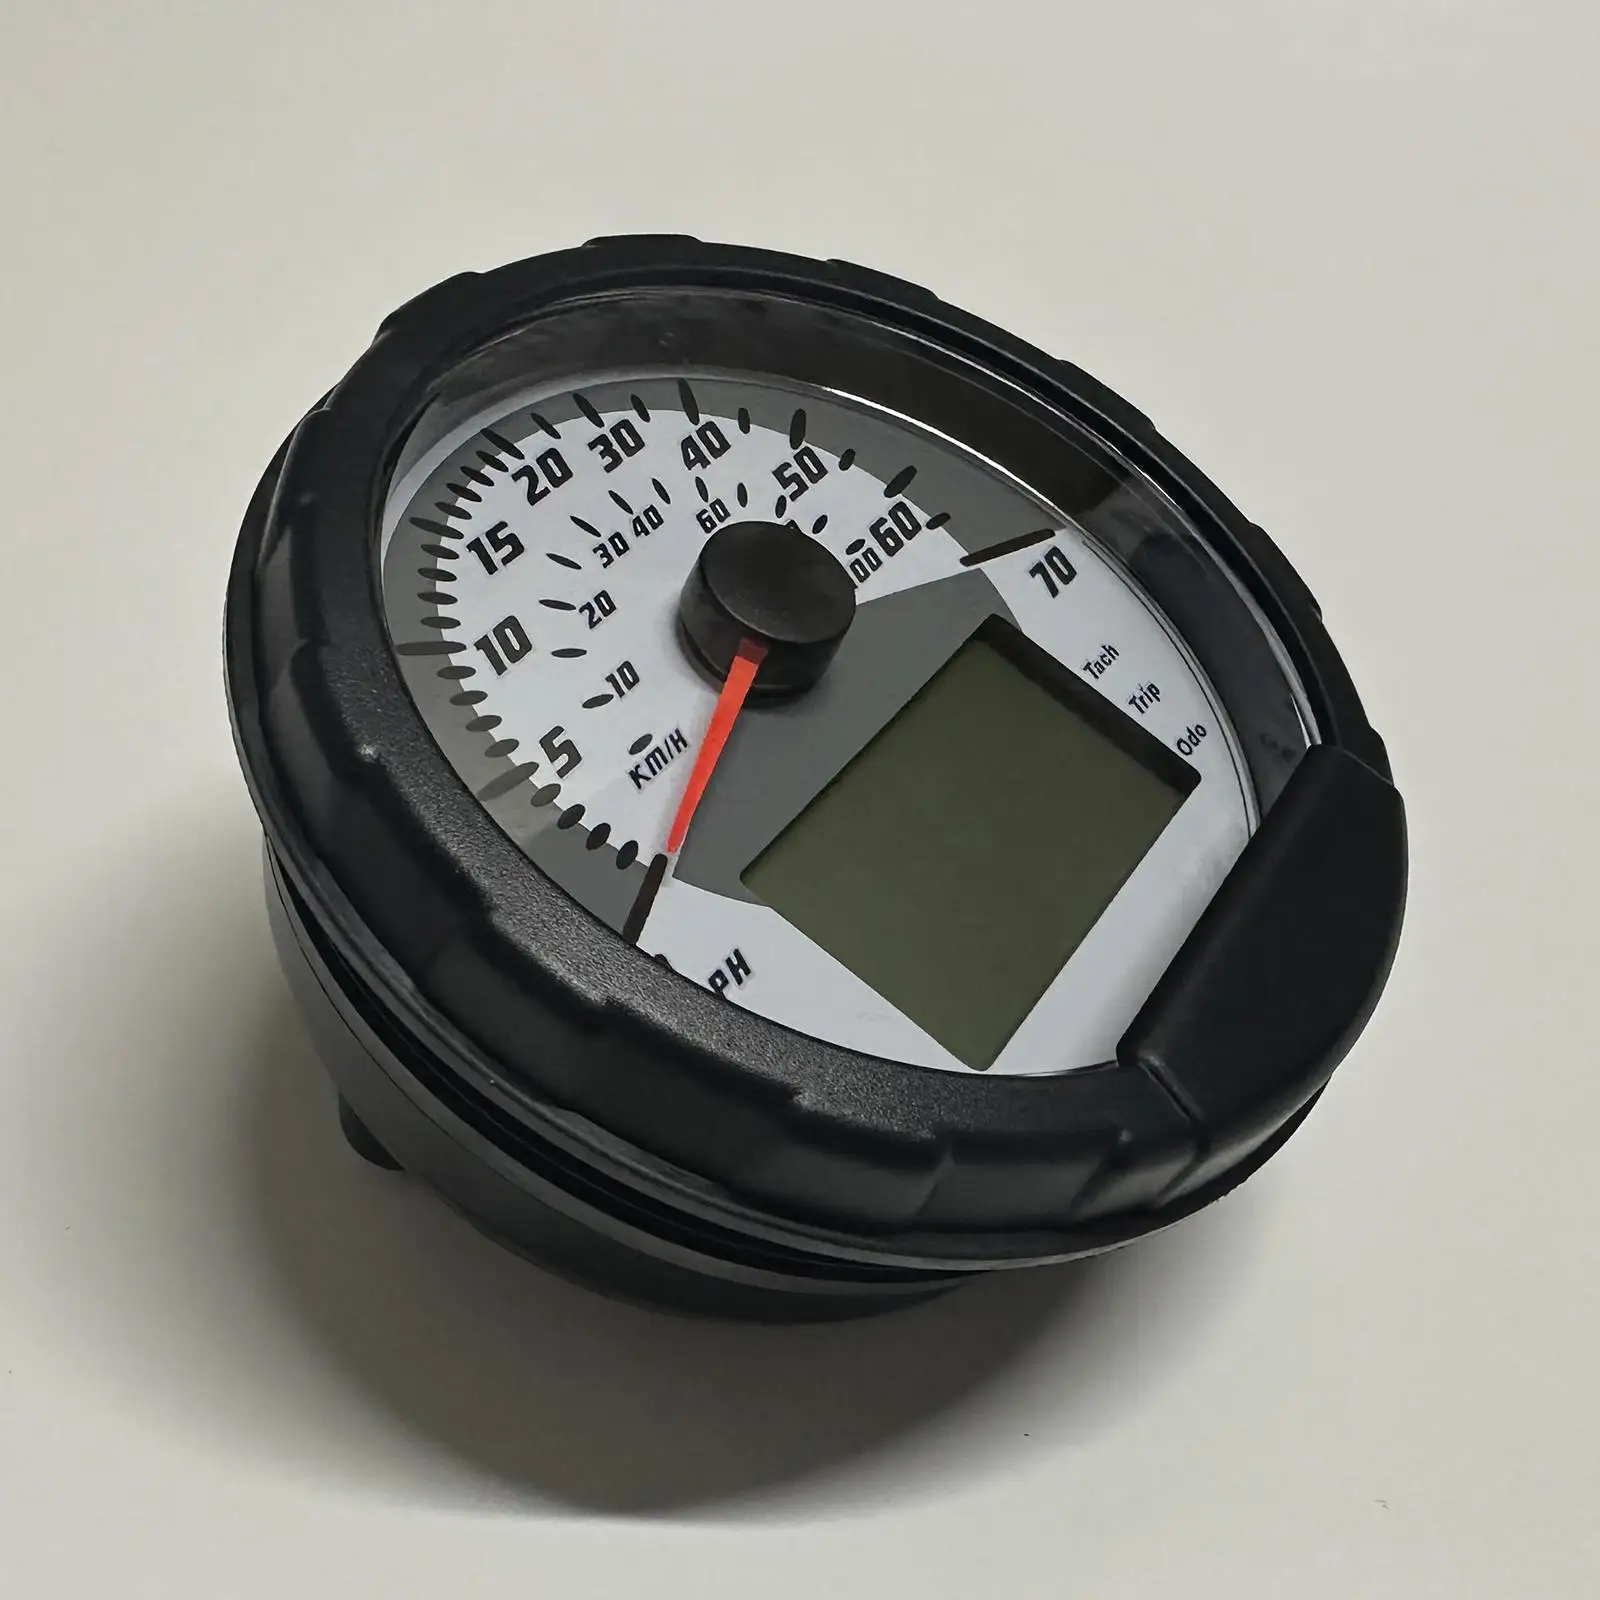 ATV Speedometer 3280431 Direct Replaces Digital Display Durable Multifunction Gauge Cluster for Sportsman 400